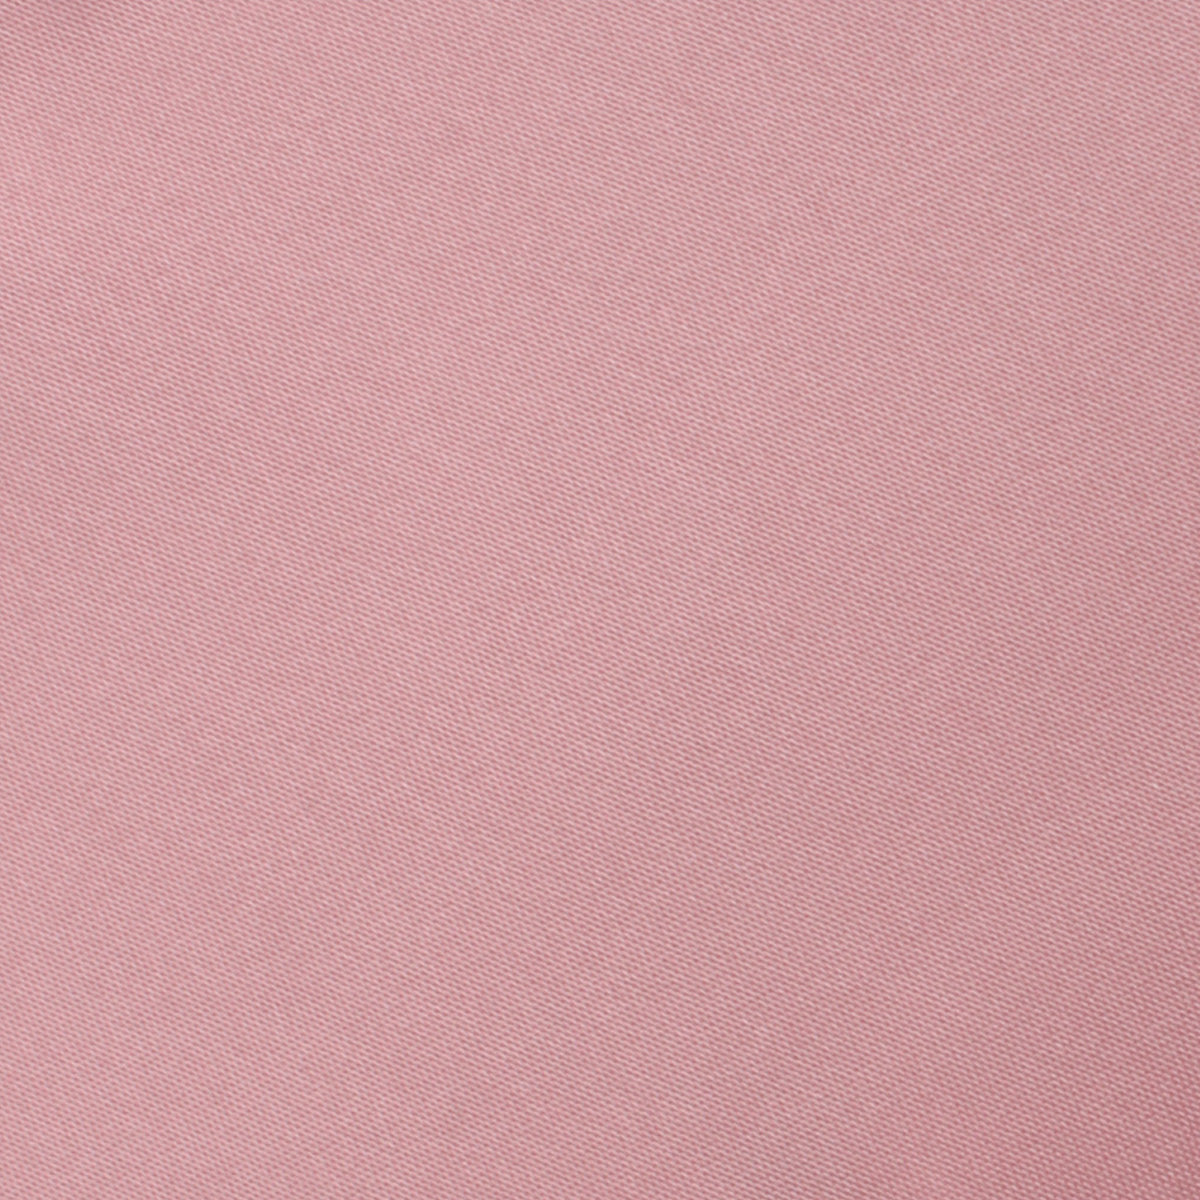 Dusty Blush Pink Satin Skinny Tie Fabric